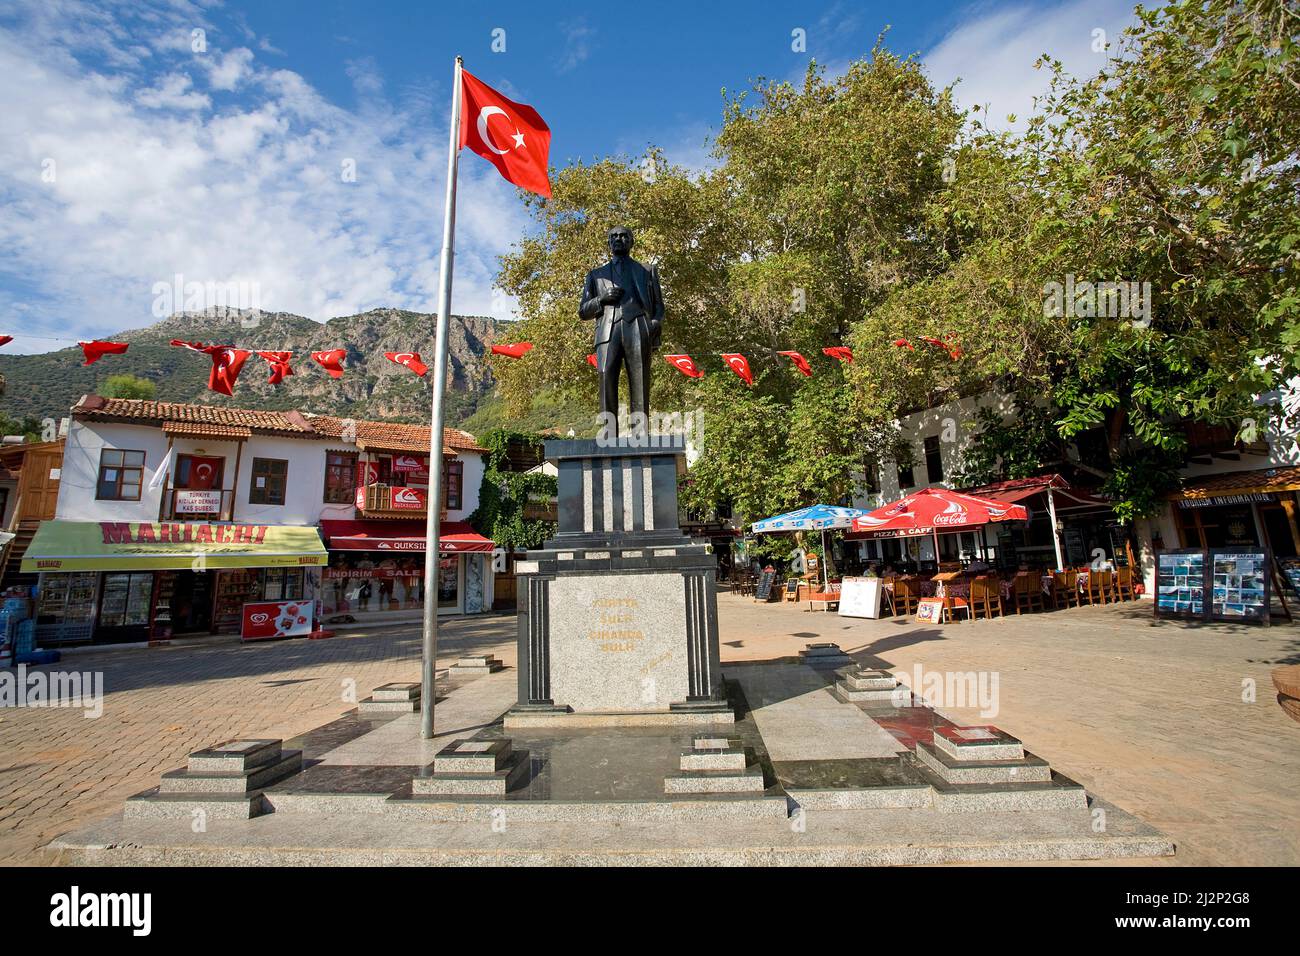 Monumento di Mustafa Kemal Atatuerk, mercato del vecchio Kas, Lycia, Turchia, mare mediterraneo Foto Stock